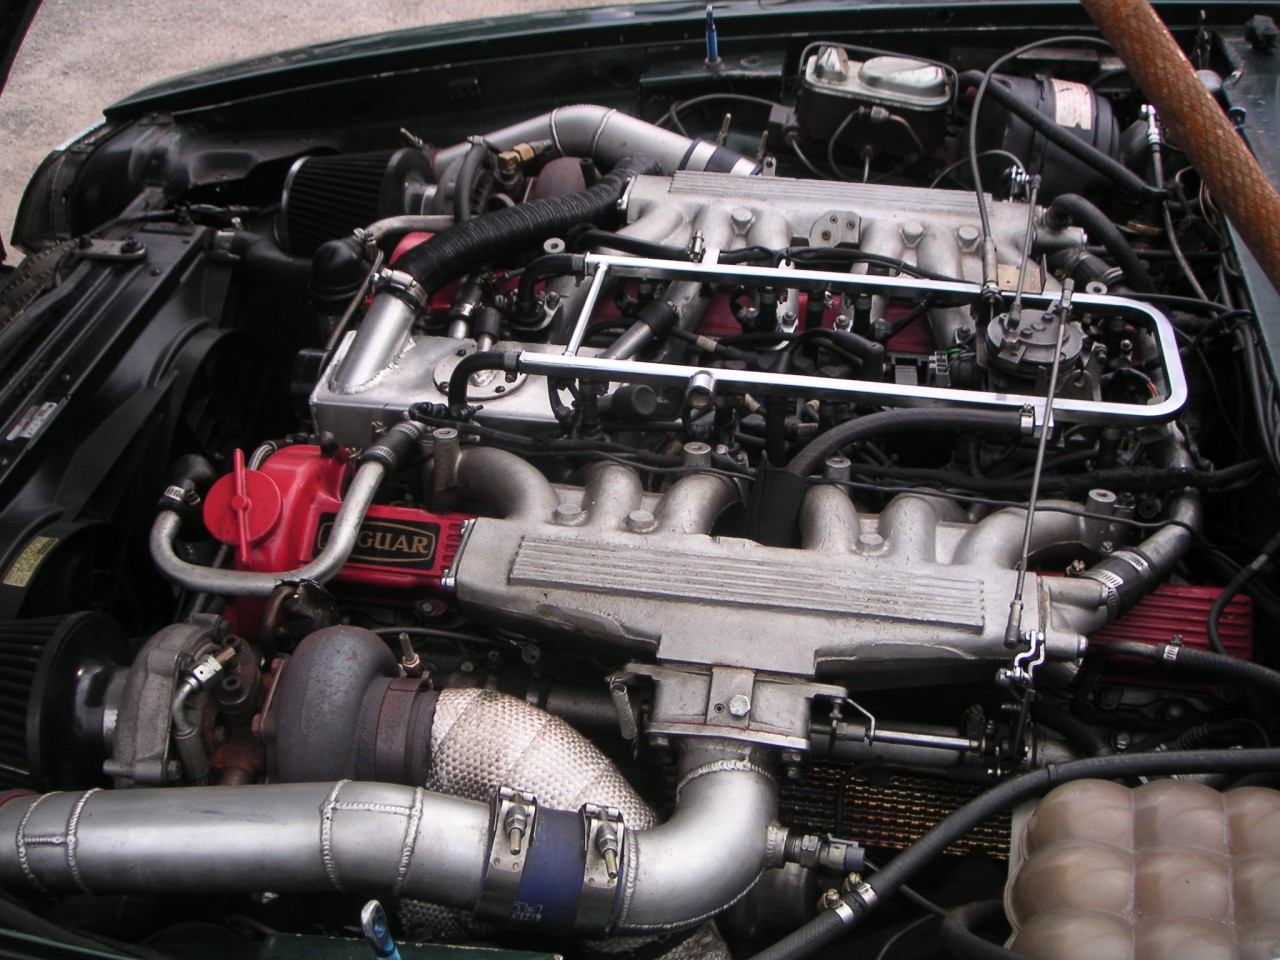 For Sale: 1977 Jaguar XJS V12 twin-turbo race car ... 2004 jaguar s type engine diagram 